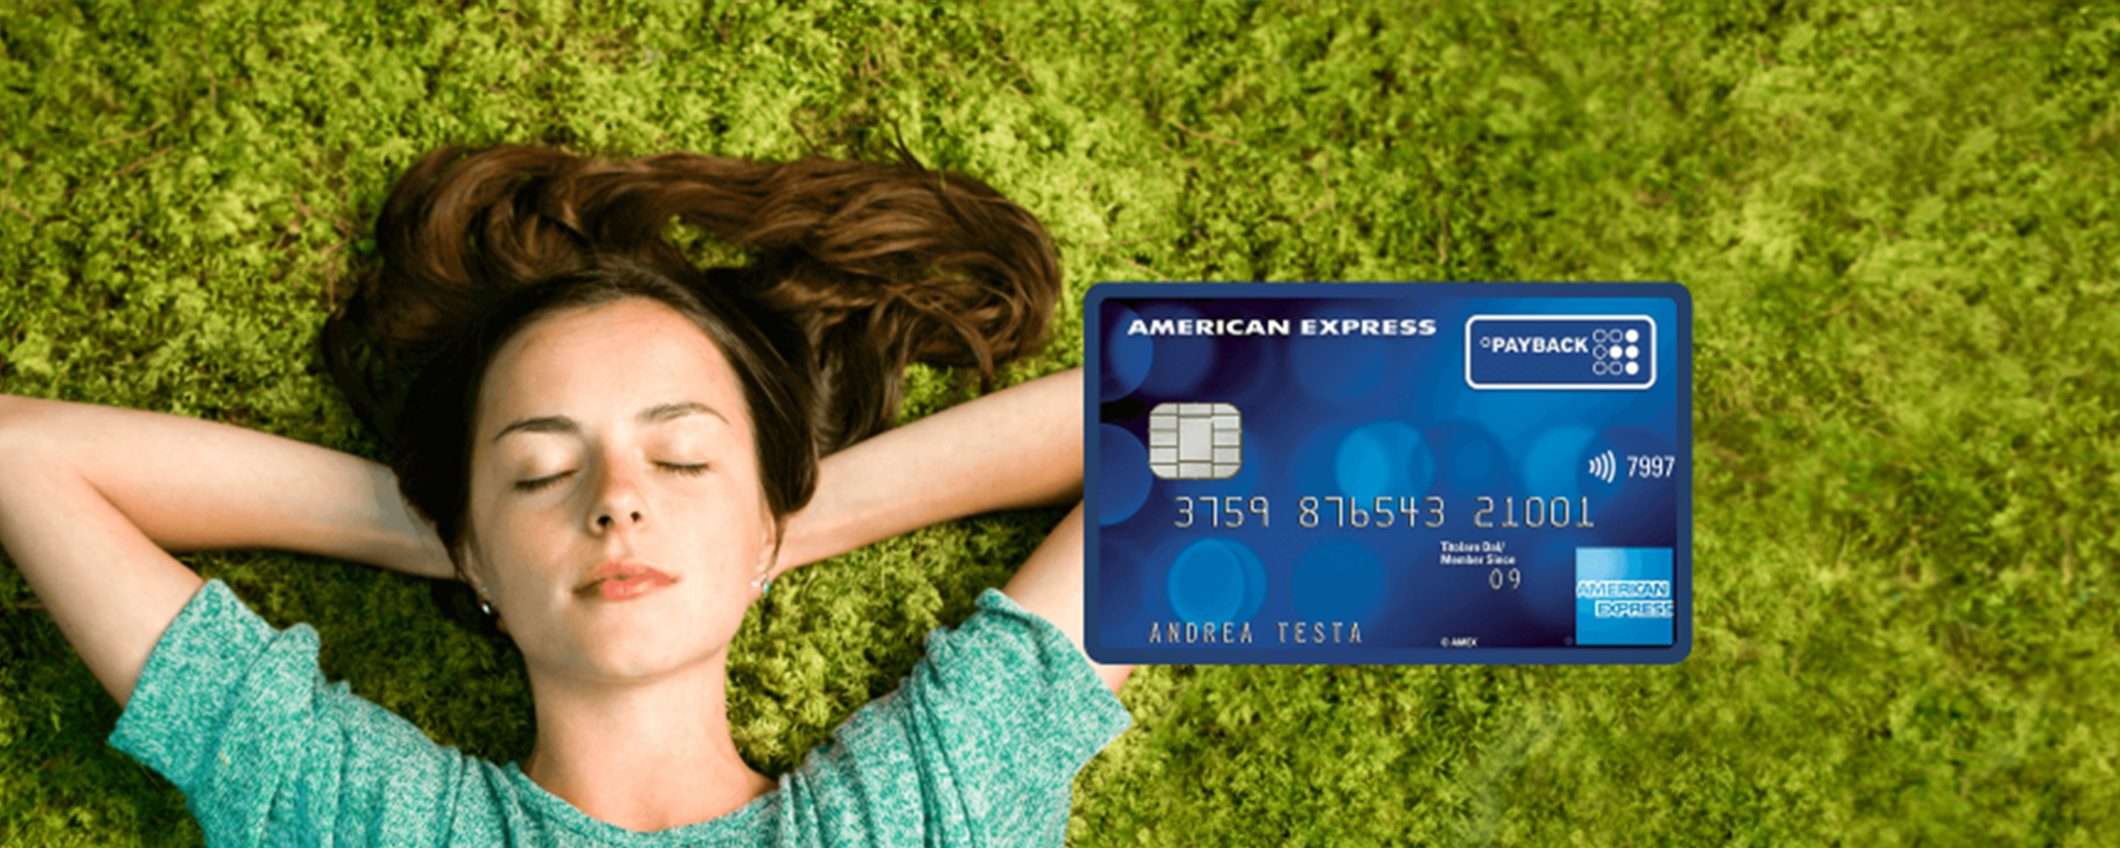 PAYBACK American Express: accumula punti più velocemente, anche online